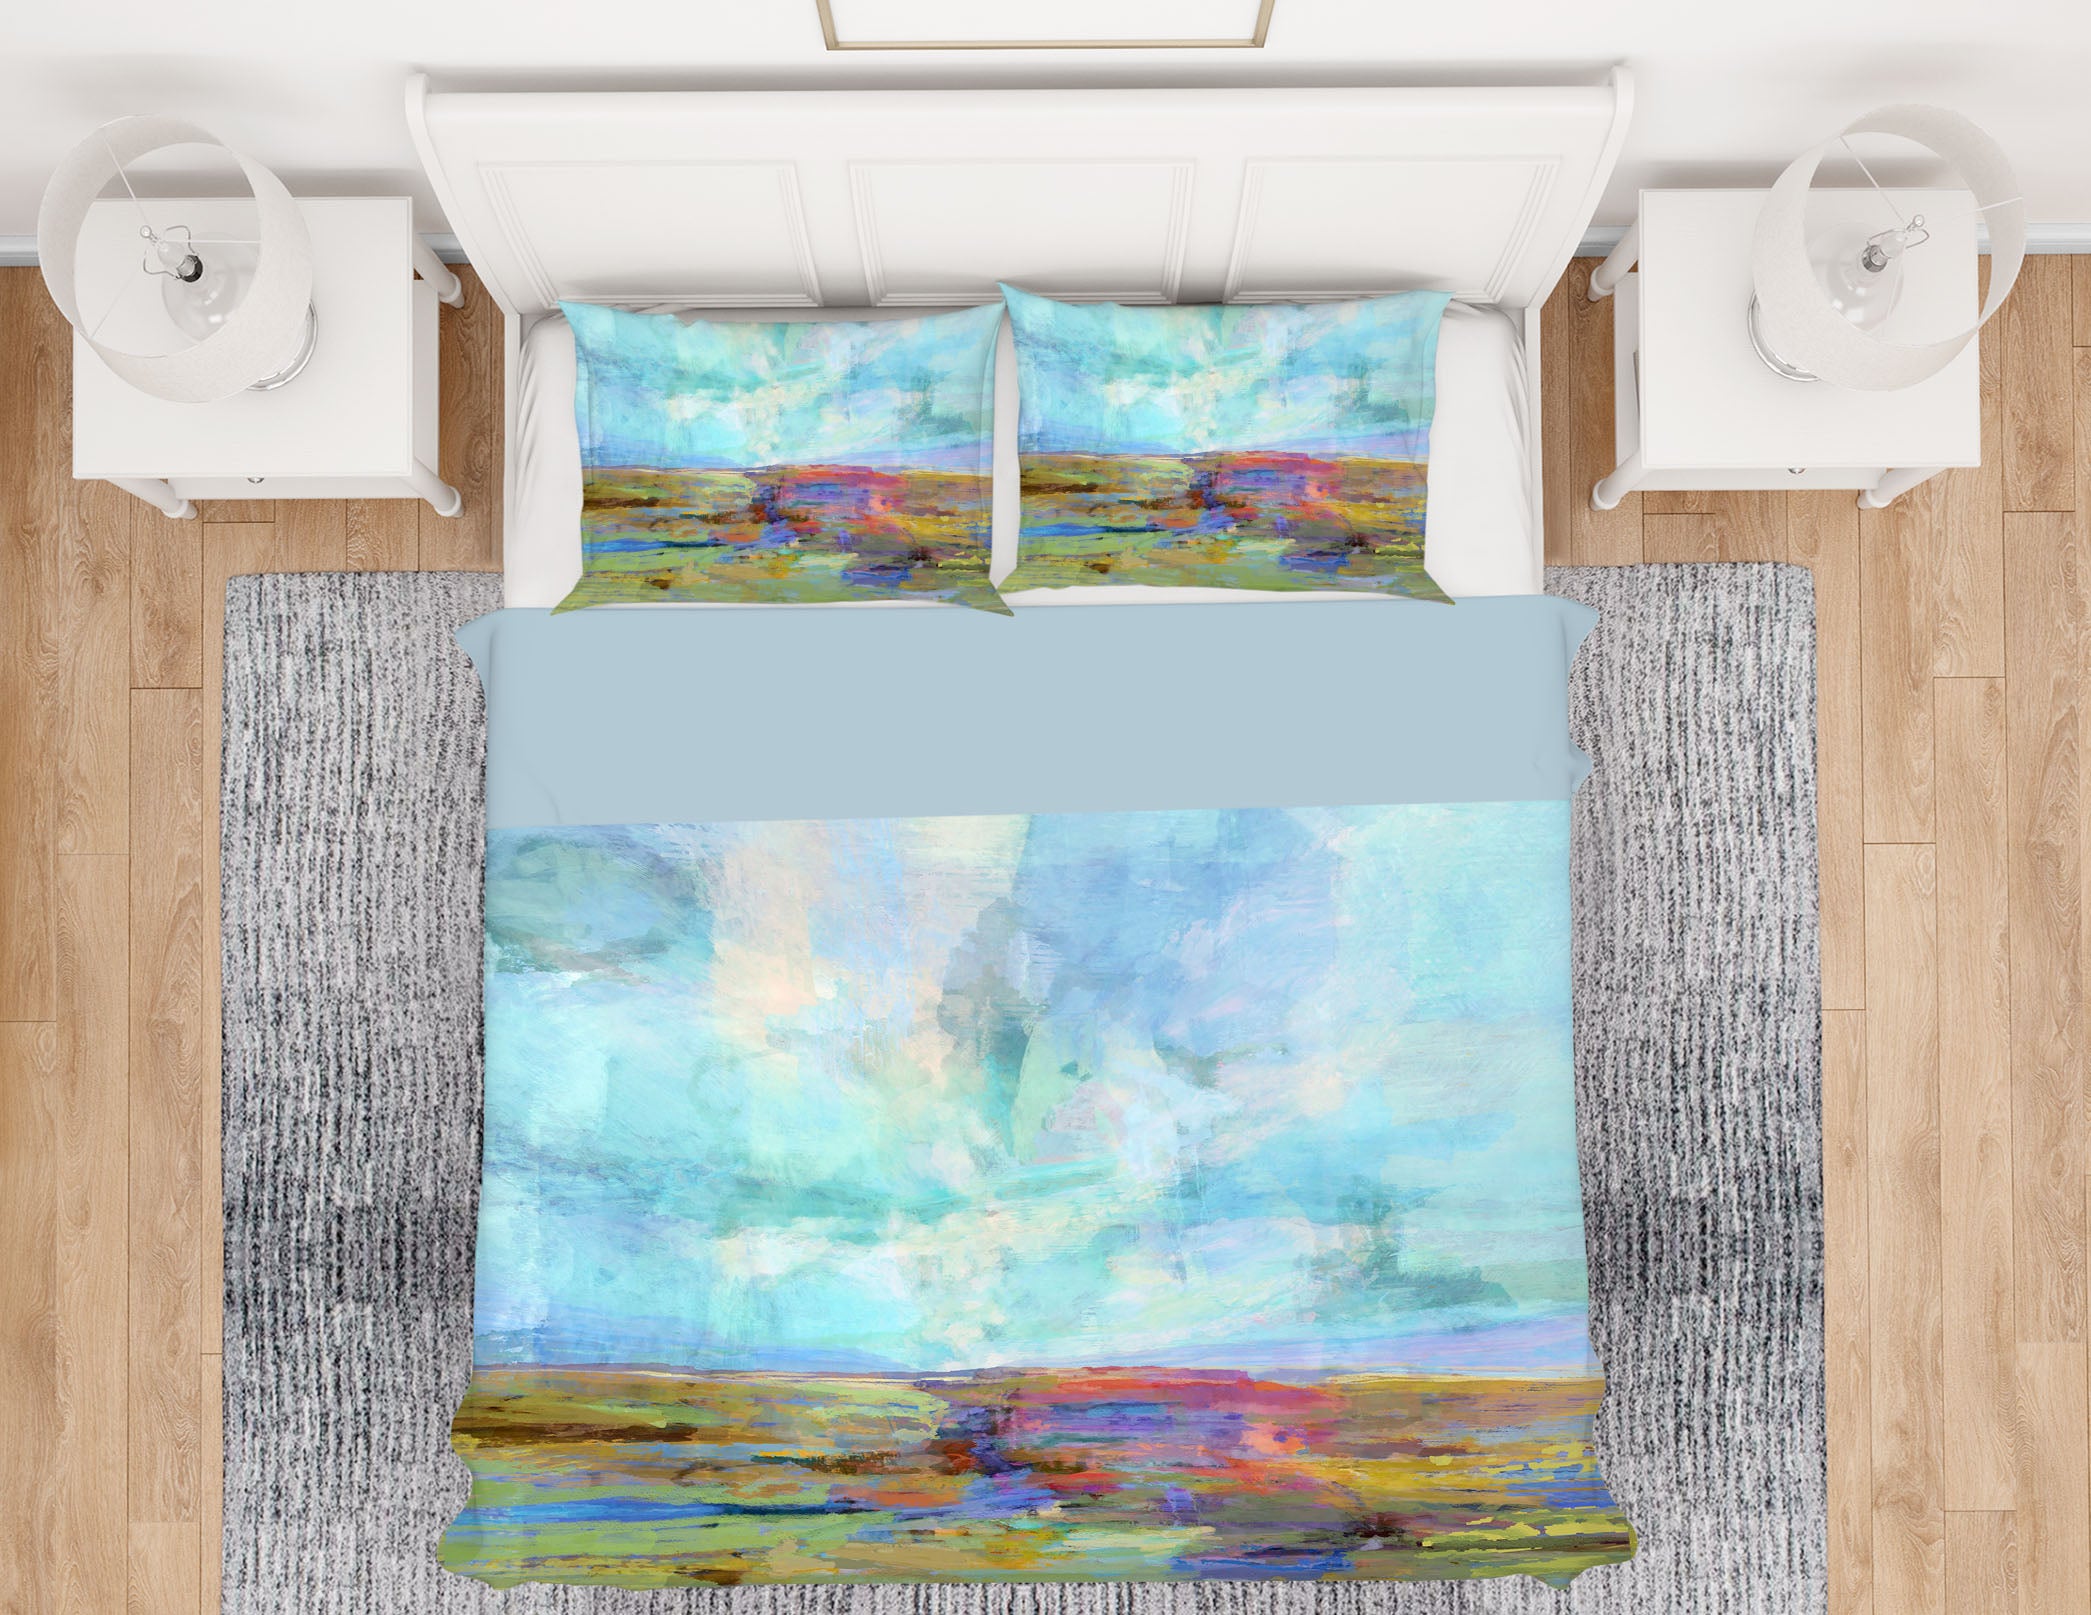 3D Prairie 2117 Michael Tienhaara Bedding Bed Pillowcases Quilt